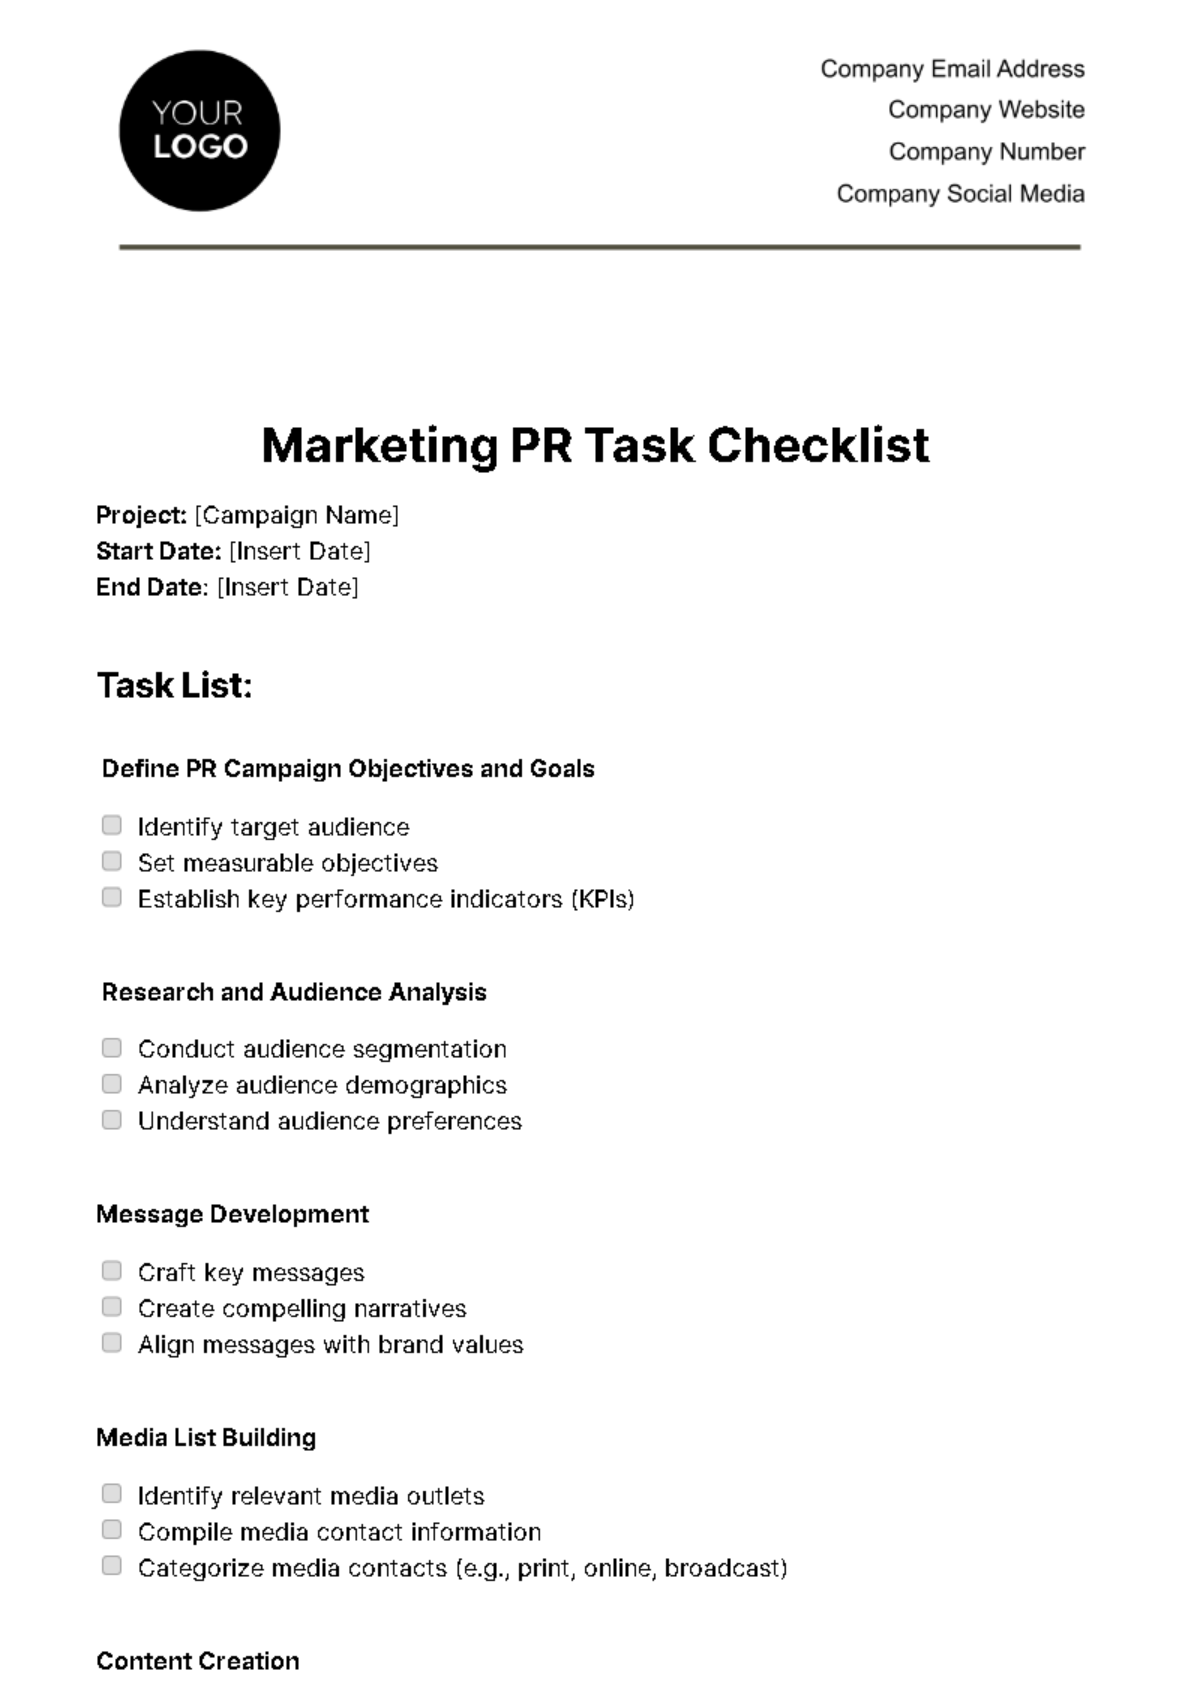 Marketing PR Task Checklist Template